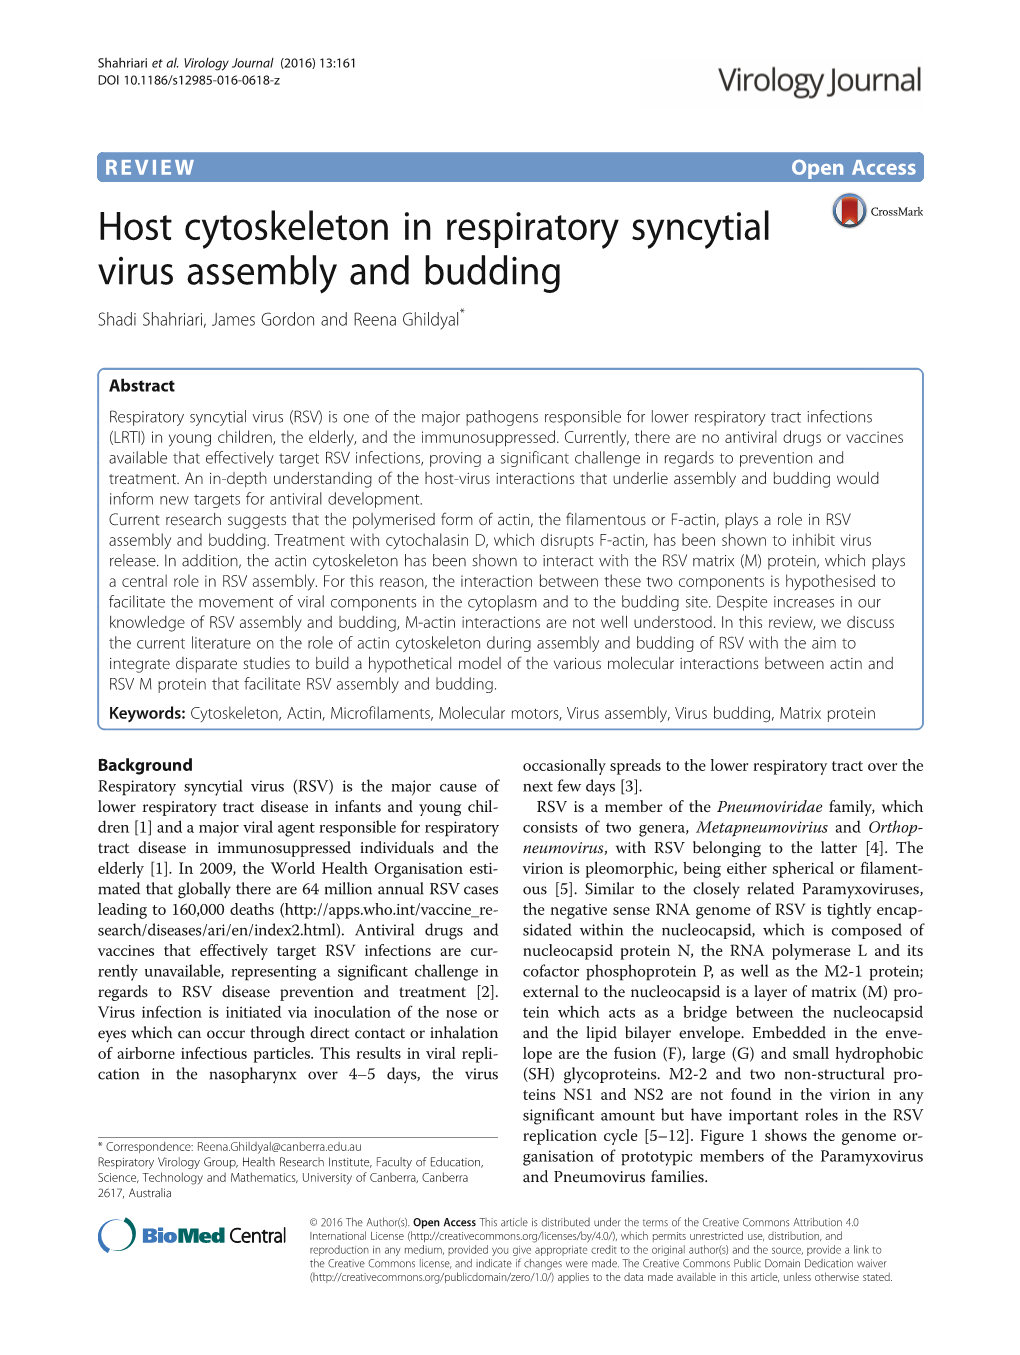 Host Cytoskeleton in Respiratory Syncytial Virus Assembly and Budding Shadi Shahriari, James Gordon and Reena Ghildyal*